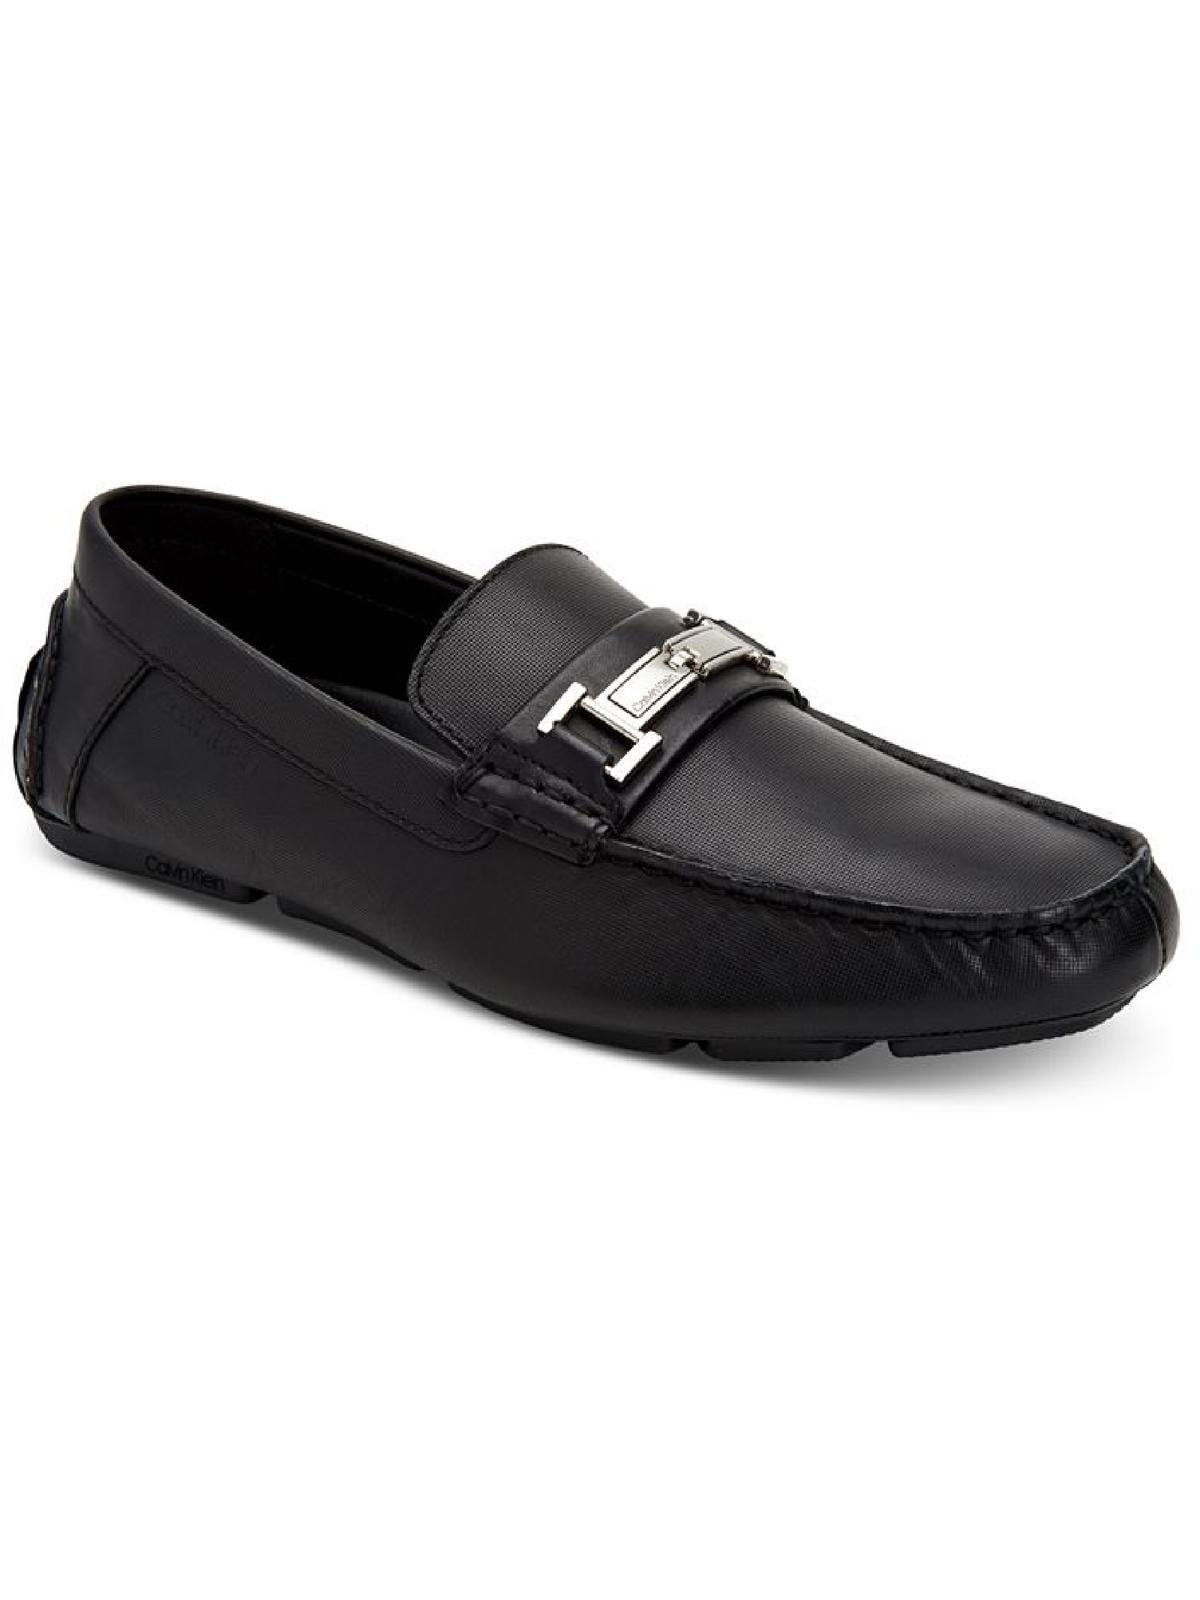 Calvin Klein Mens Magnus Leather Slip On Loafers Black  Medium (D) -  